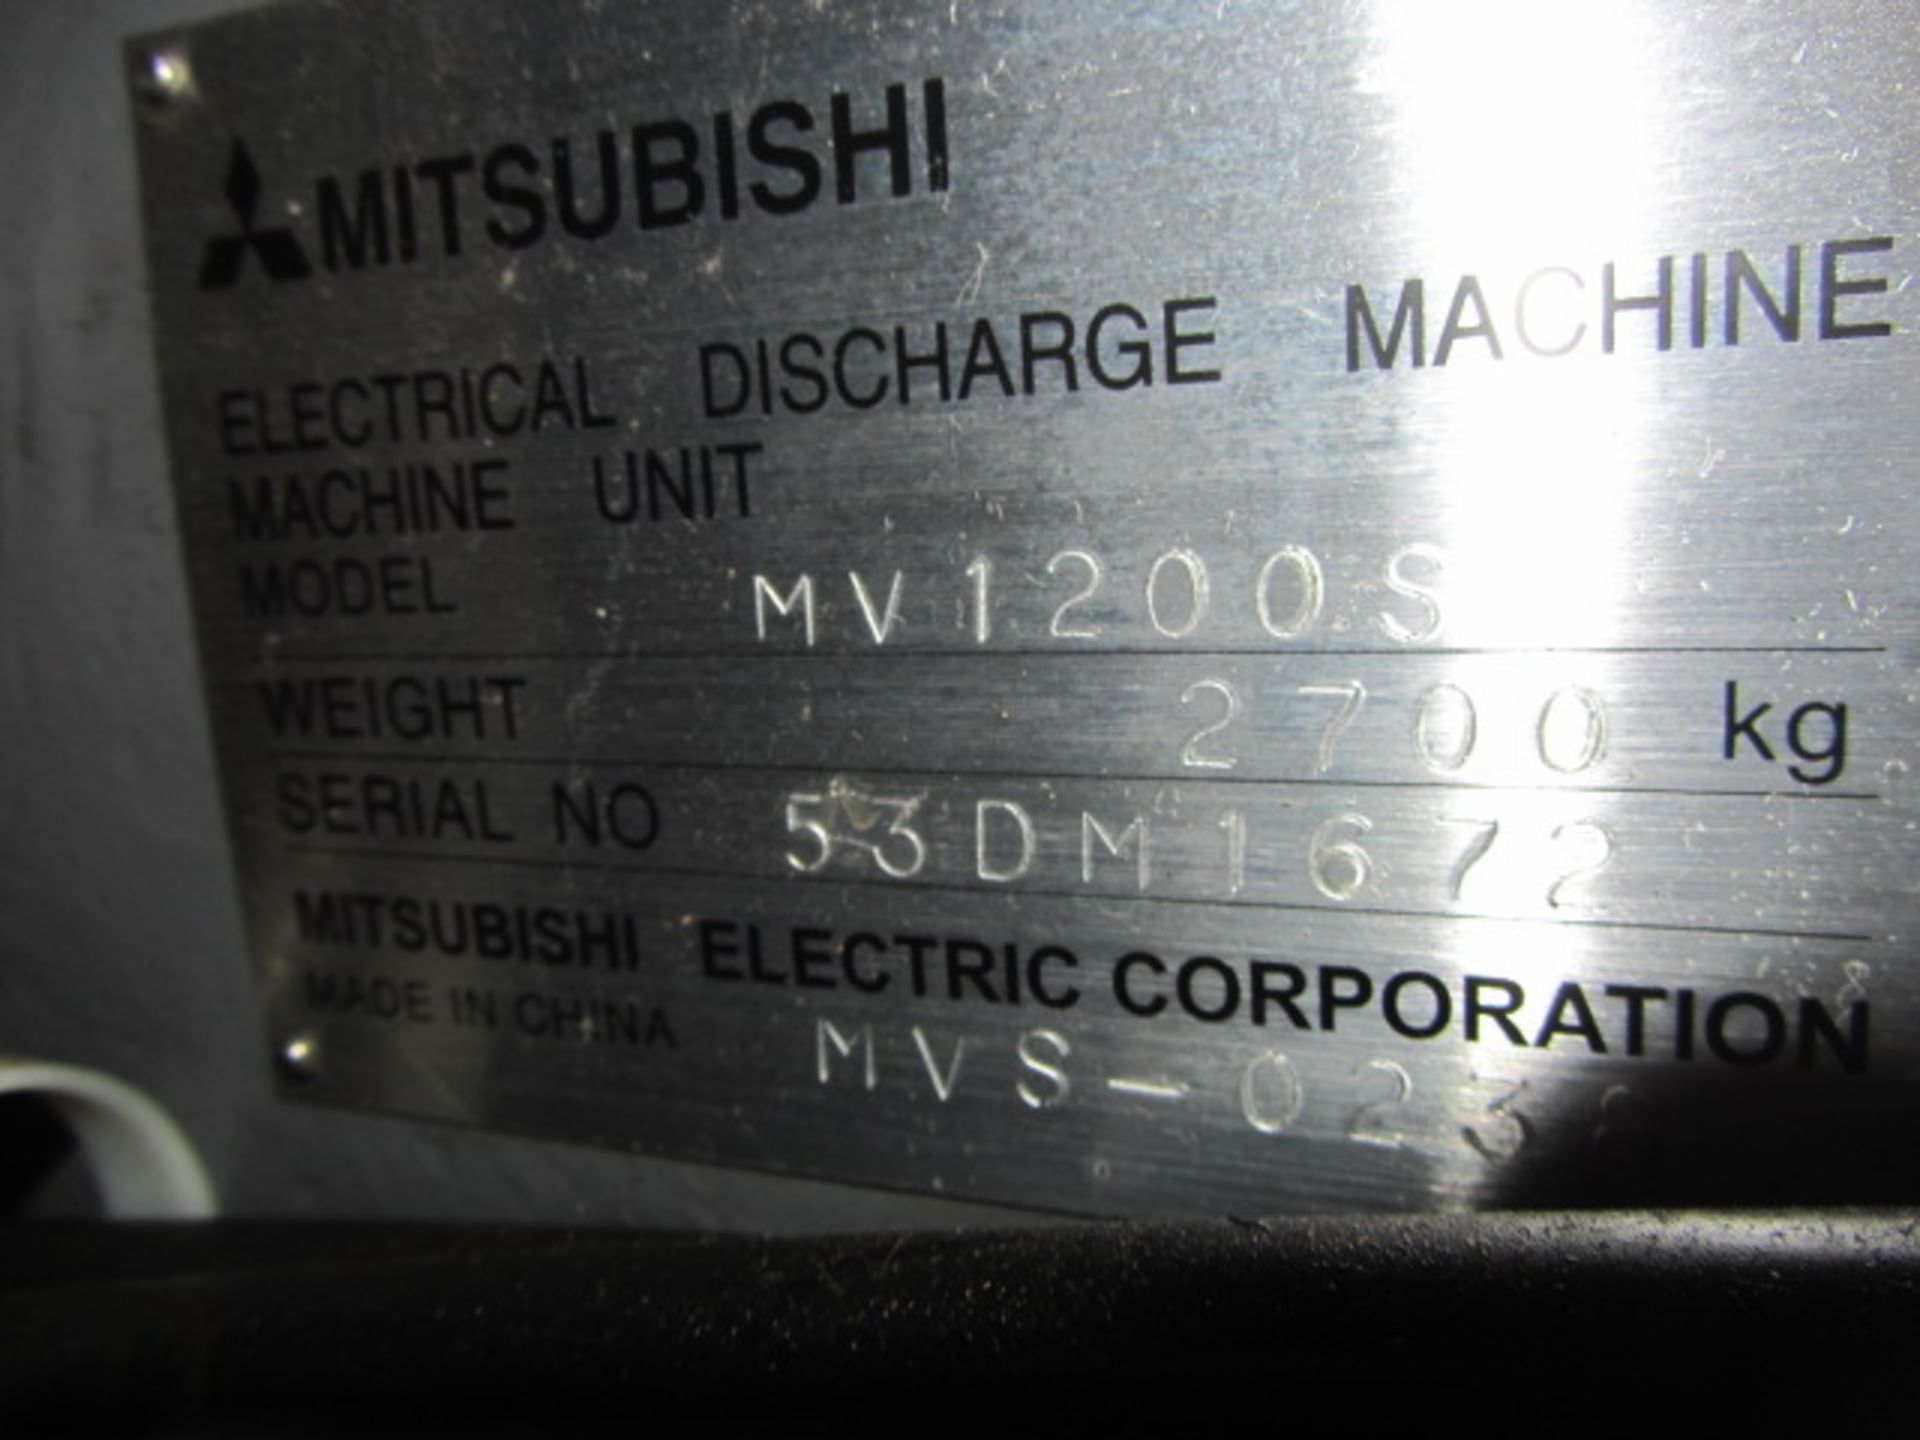 Mitsubishi MD PRO III CNC Wire EDM Machine with 16'' x 16'' x 8'' Travels, Auto-Threading, - Image 9 of 9